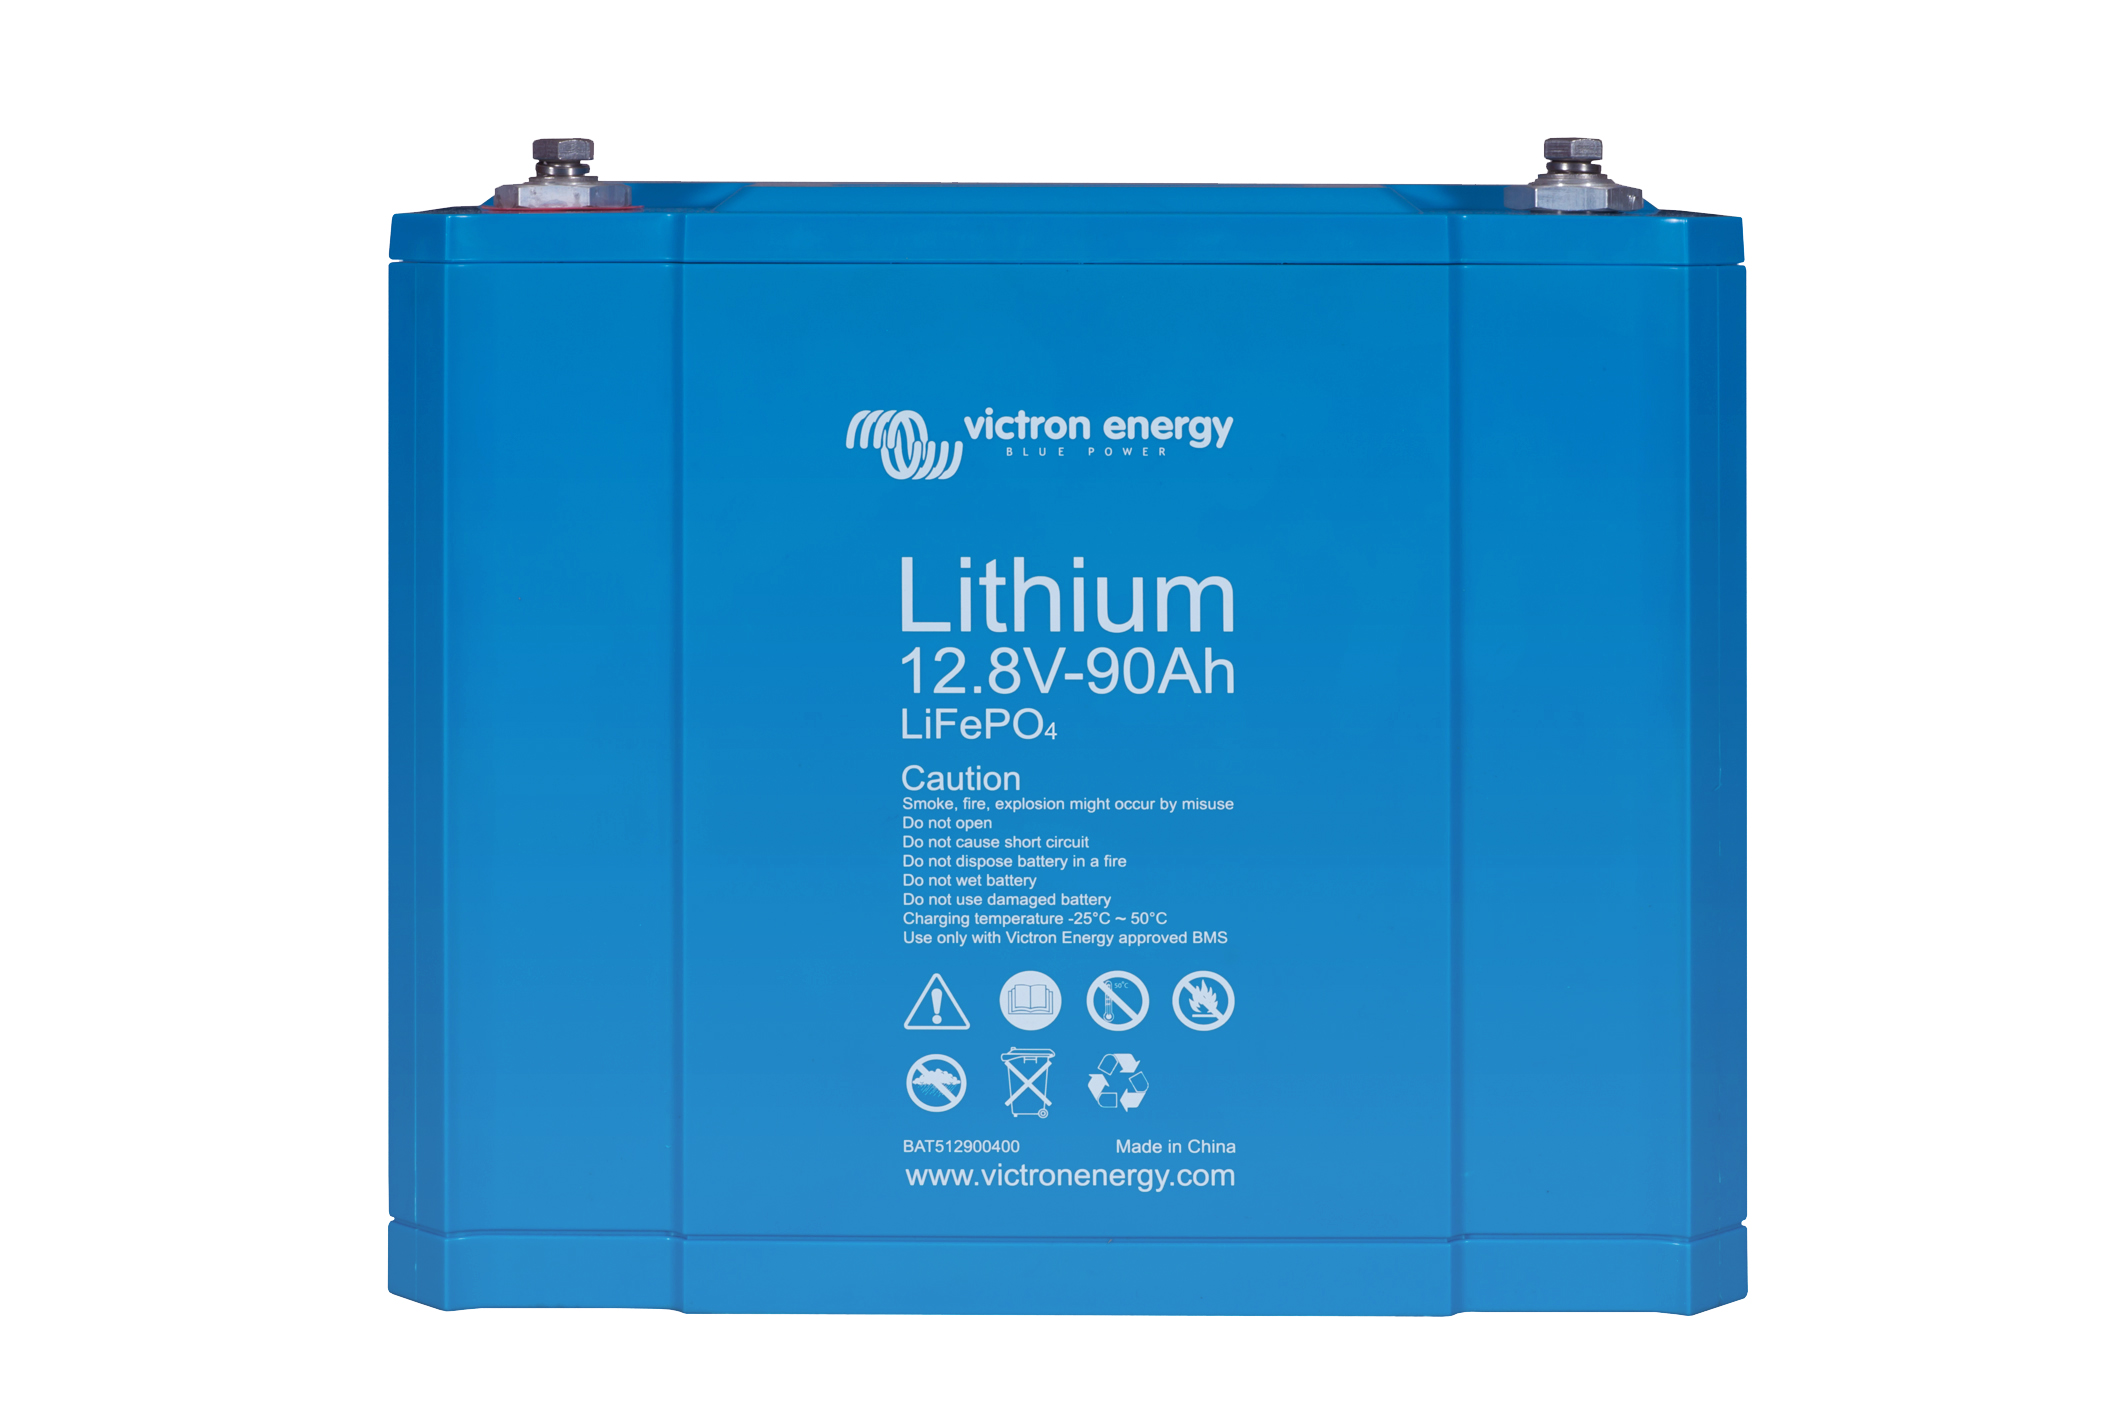 LiFePO4-Batterie 12V 100Ah Lithium-Eisenphosphat